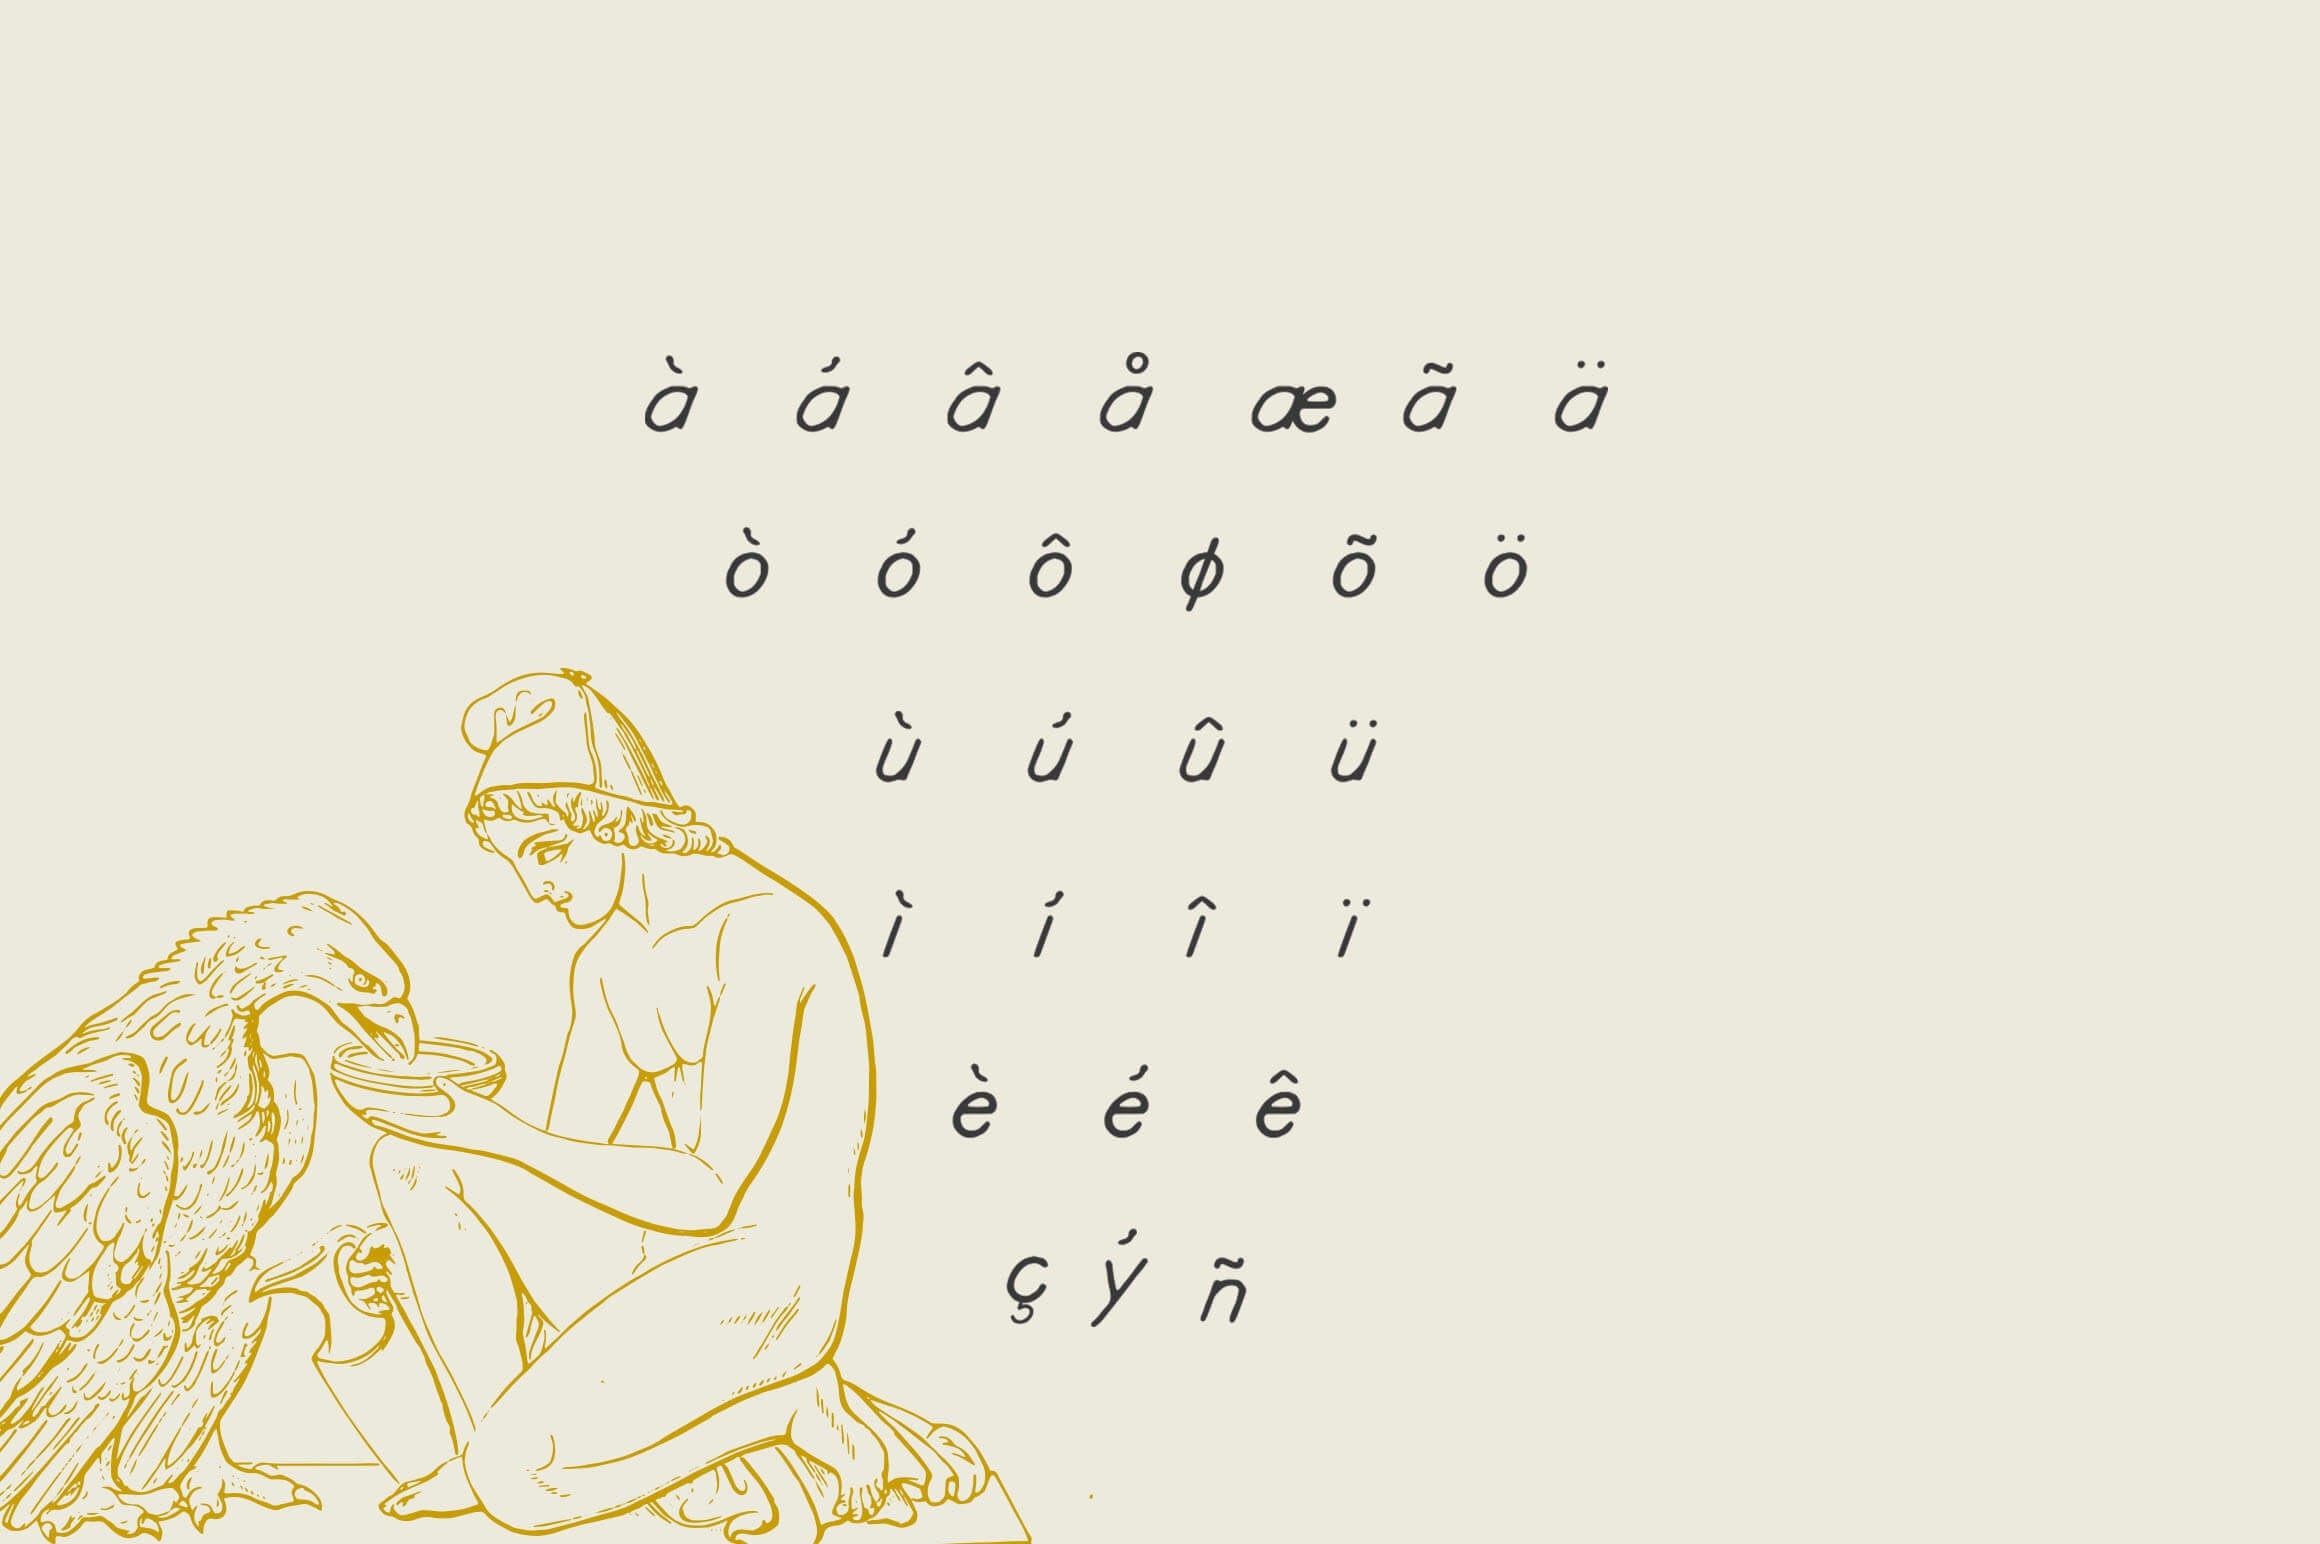 Kyril - A display hand drawn font